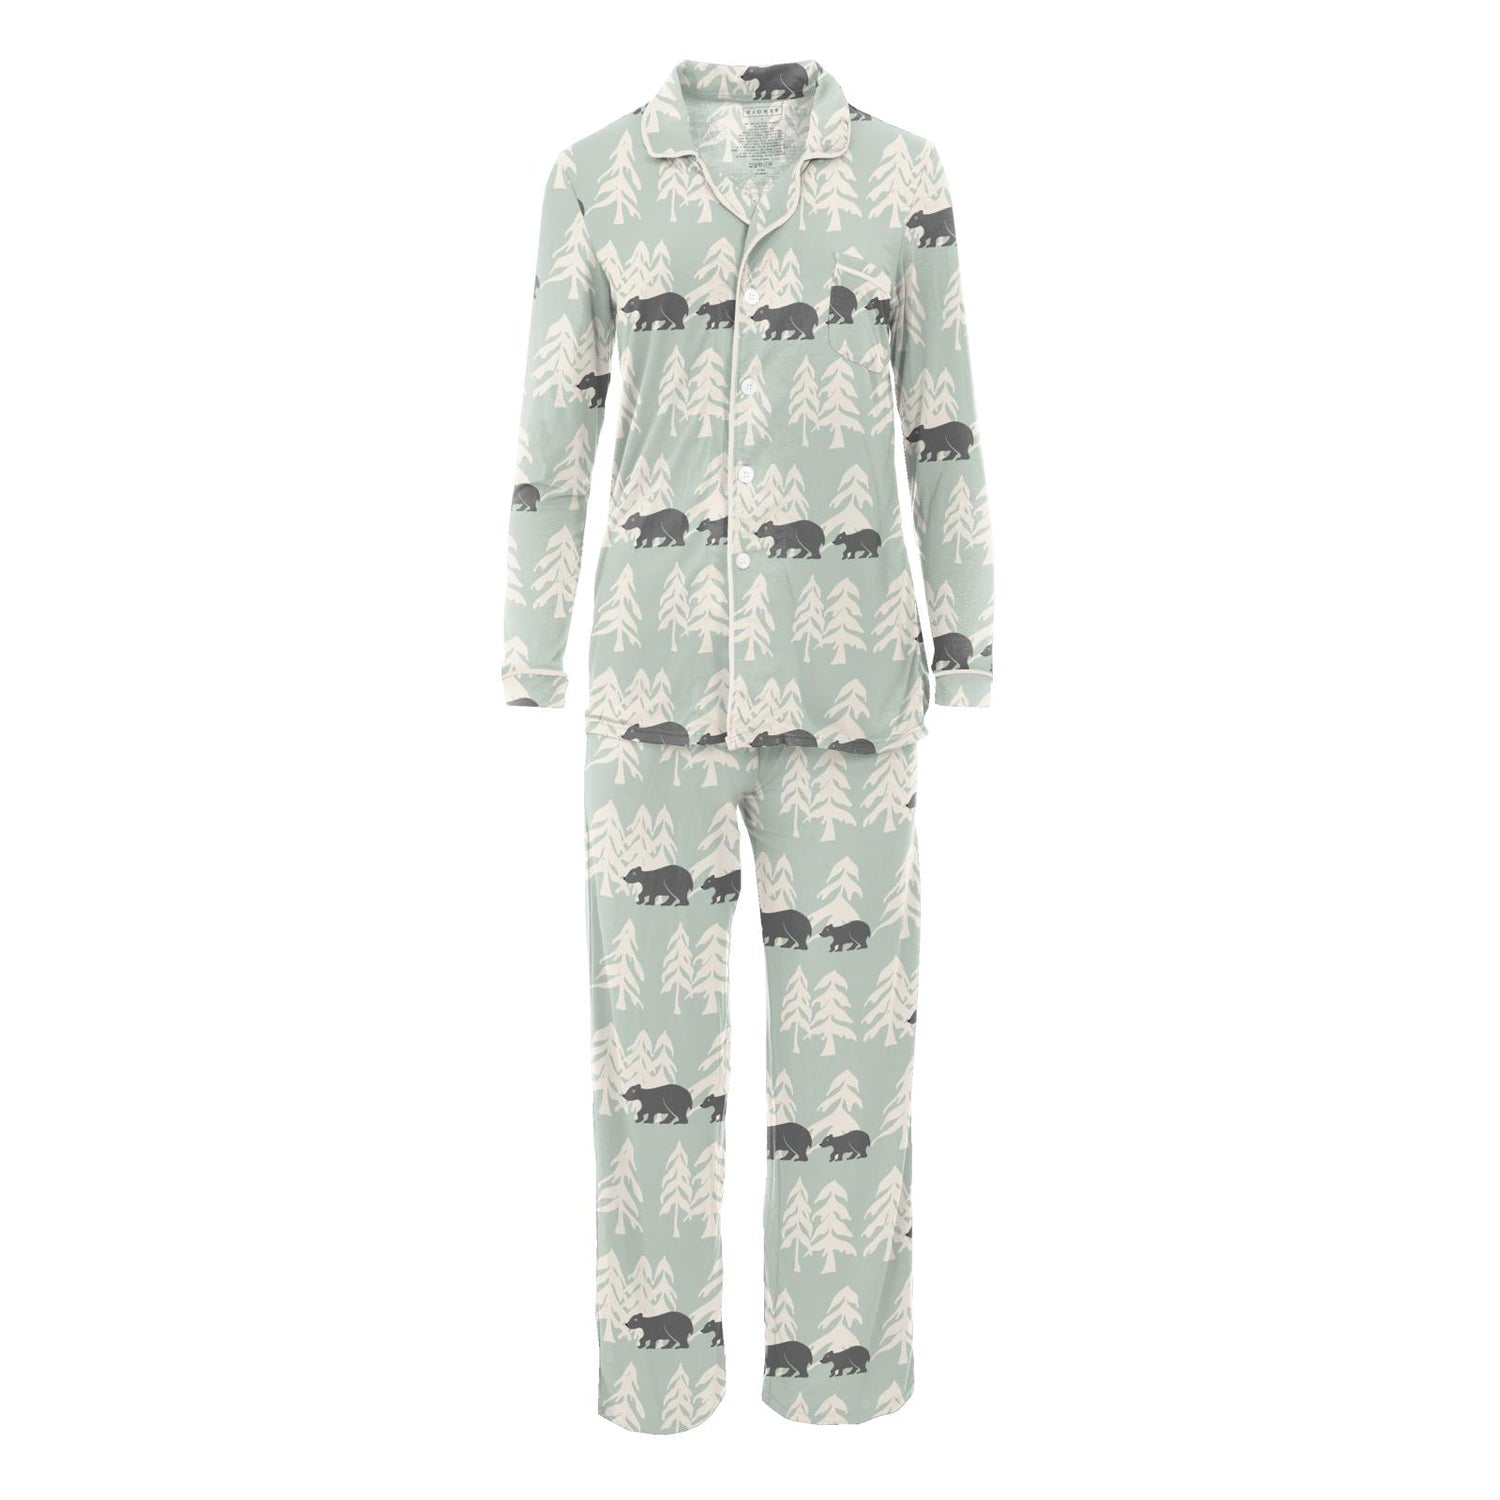 Women's Print Long Sleeve Collared Pajama Set in Aloe Bears and Trees